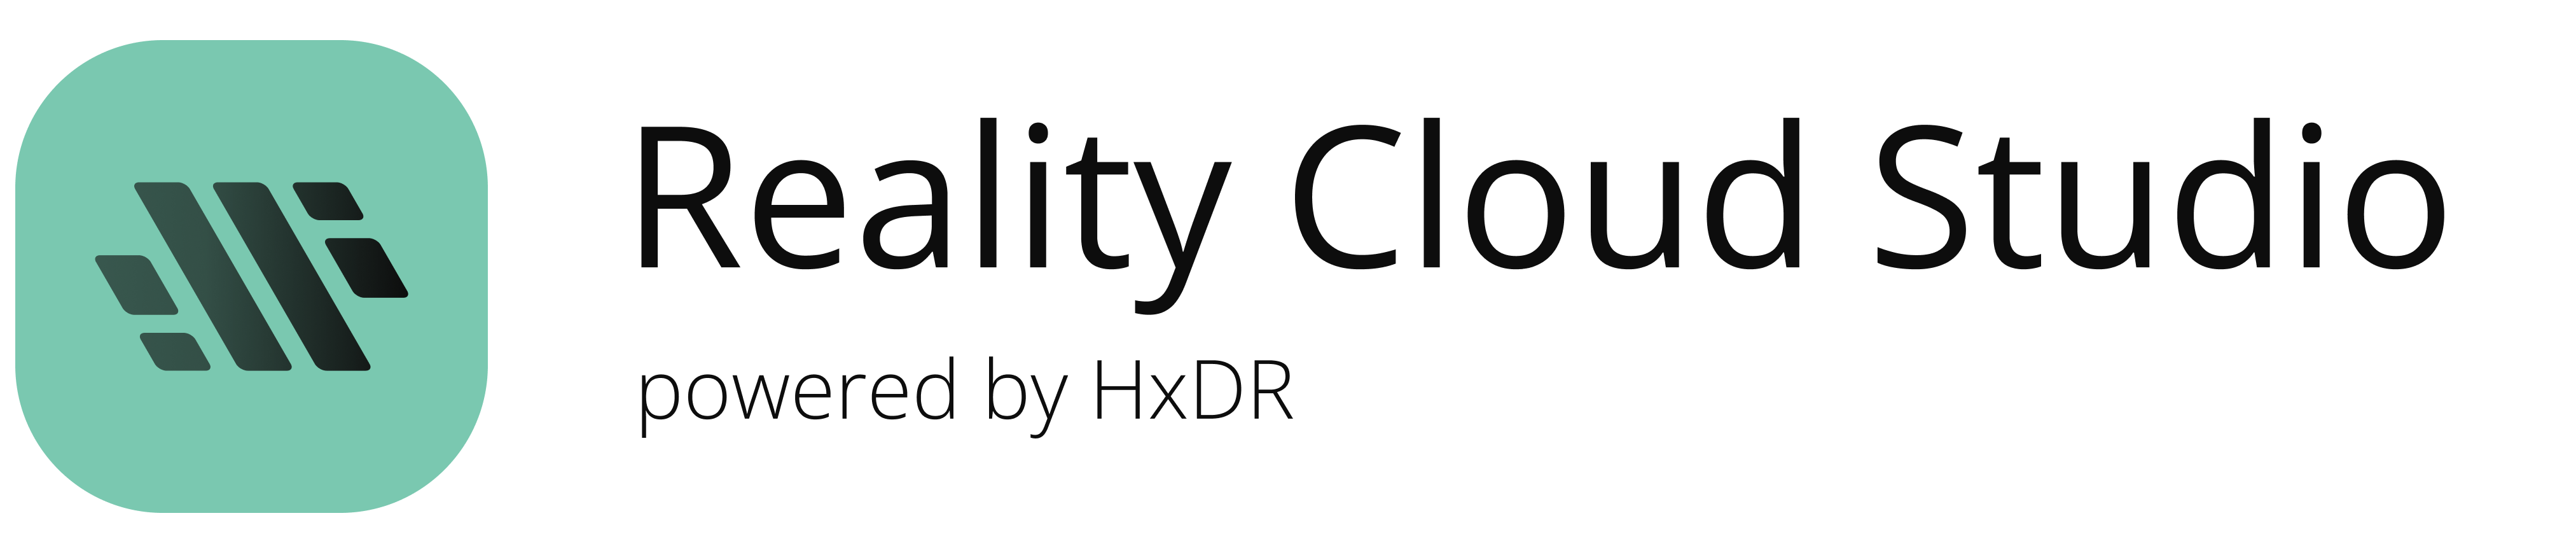 Reality Cloud Studio, powered by HxDR-logo